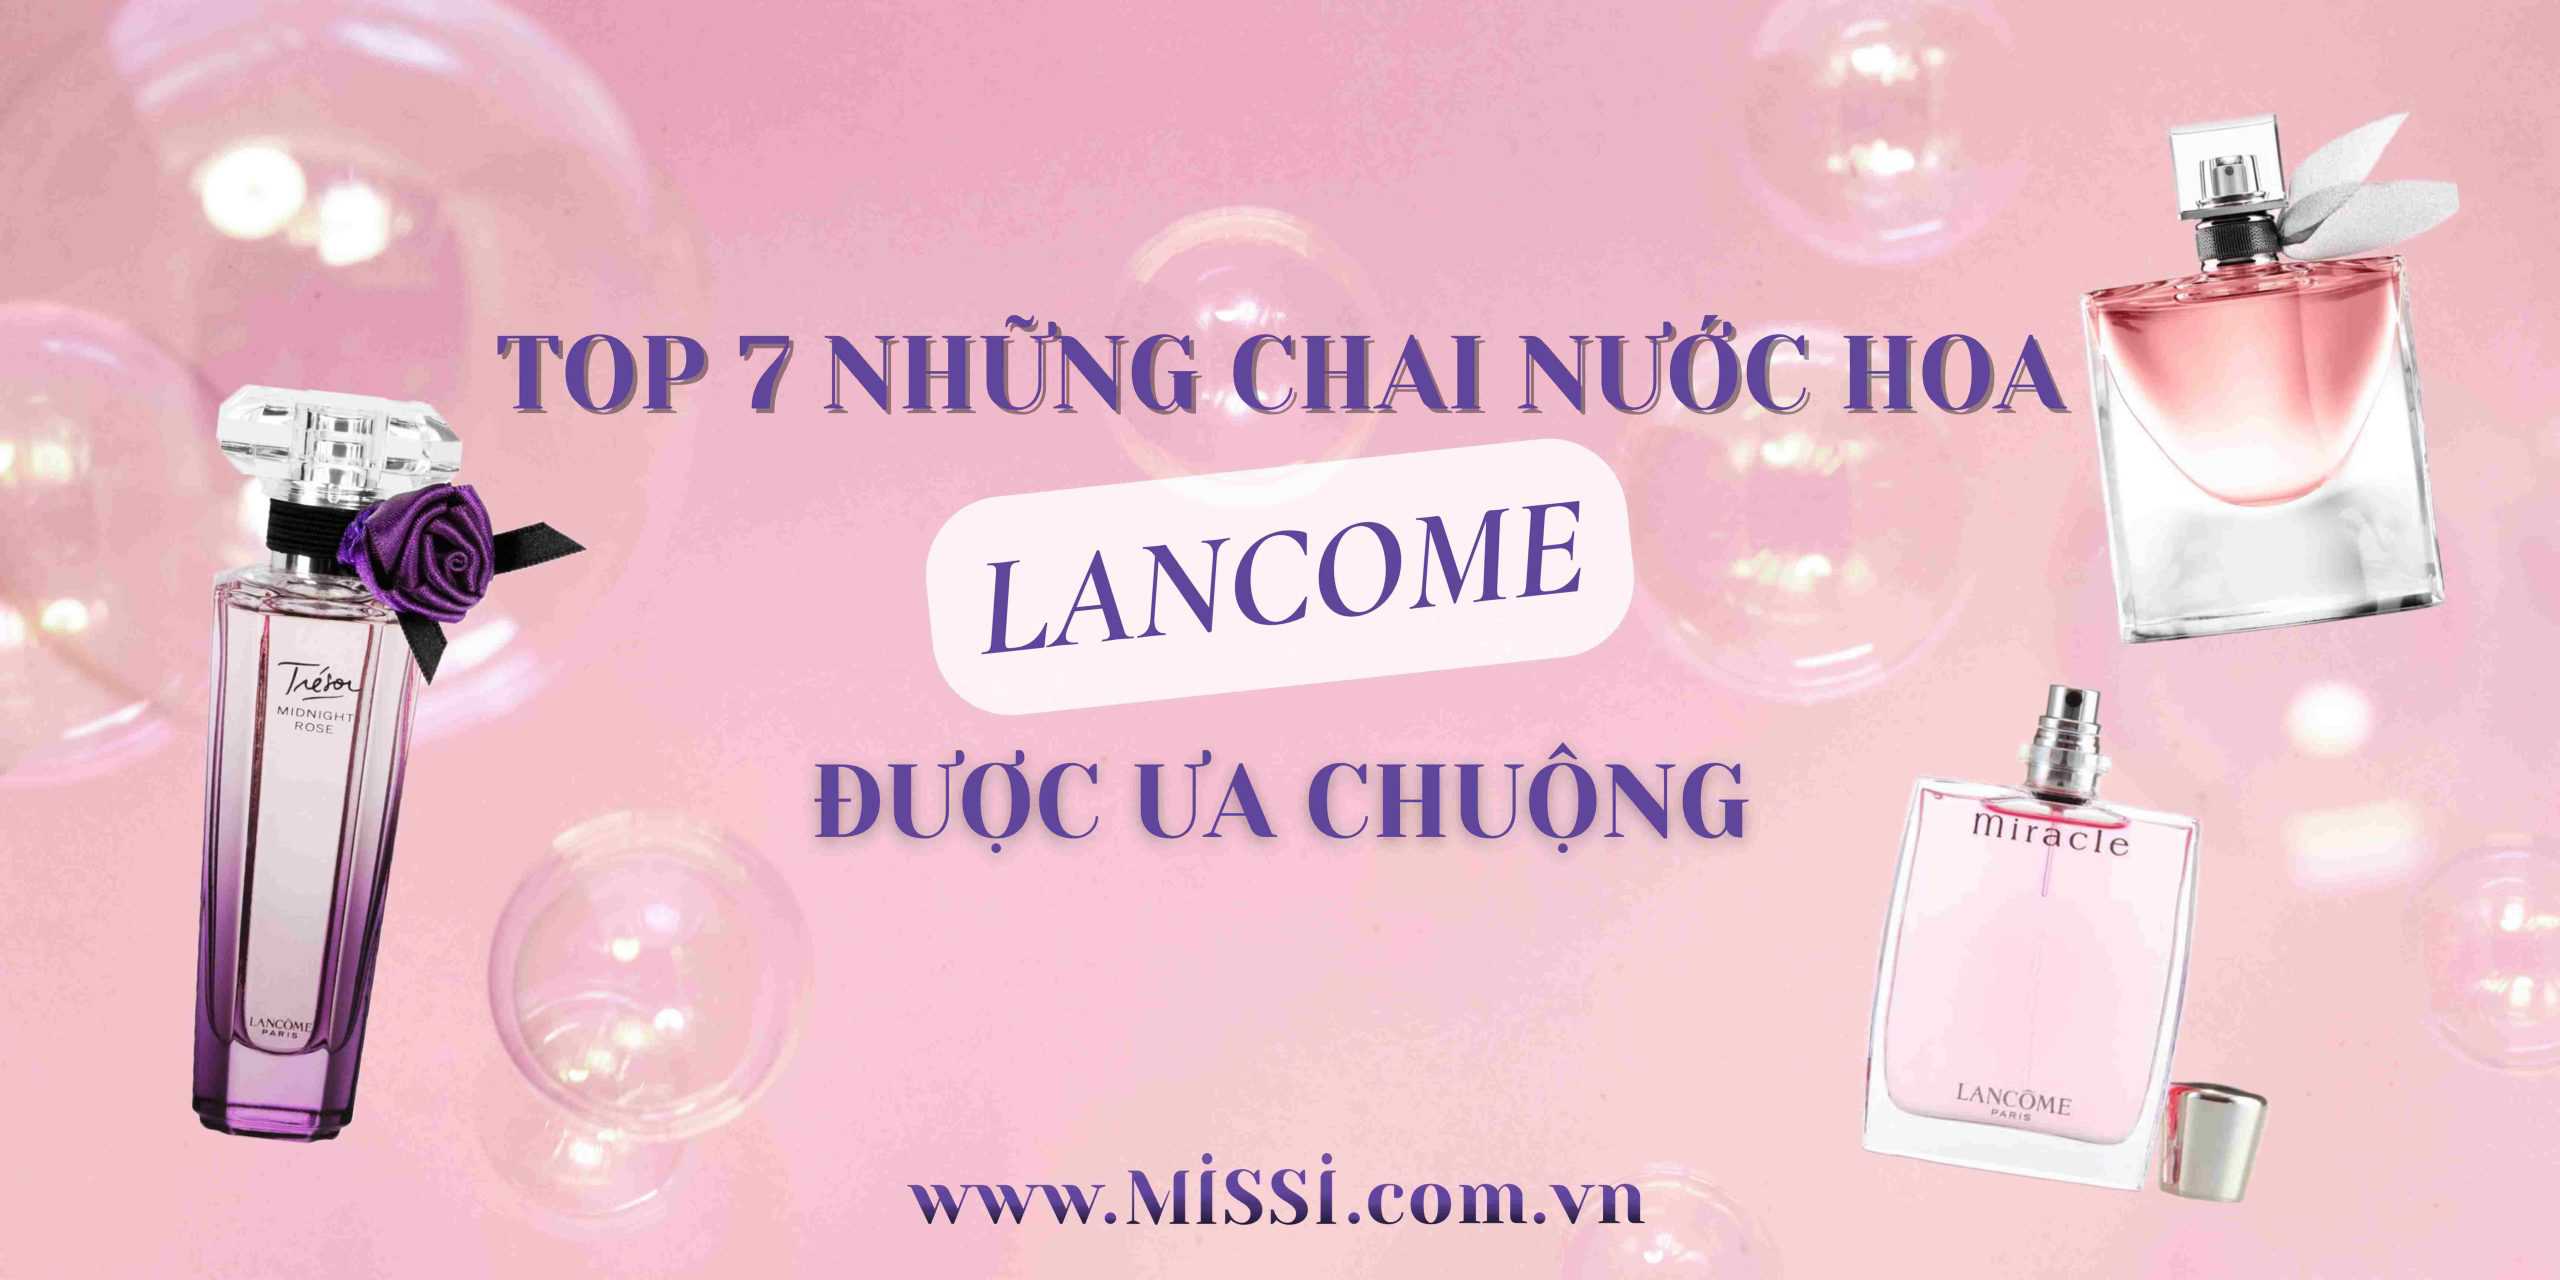 TOP 7 nhung chai nuoc hoa Lancome duoc ua chuong scaled